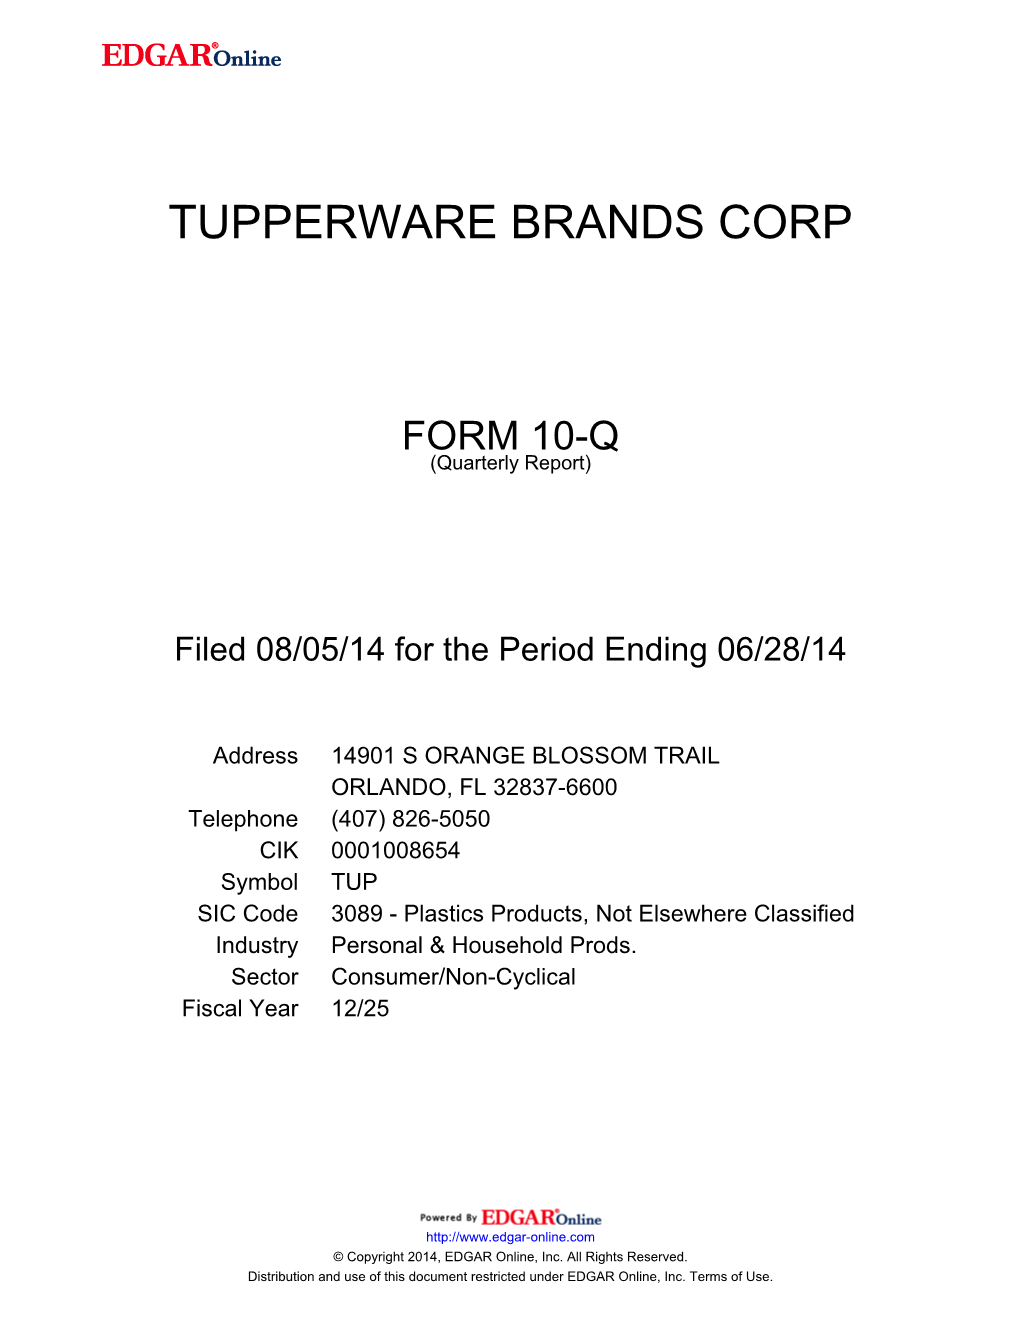 Tupperware Brands Corp